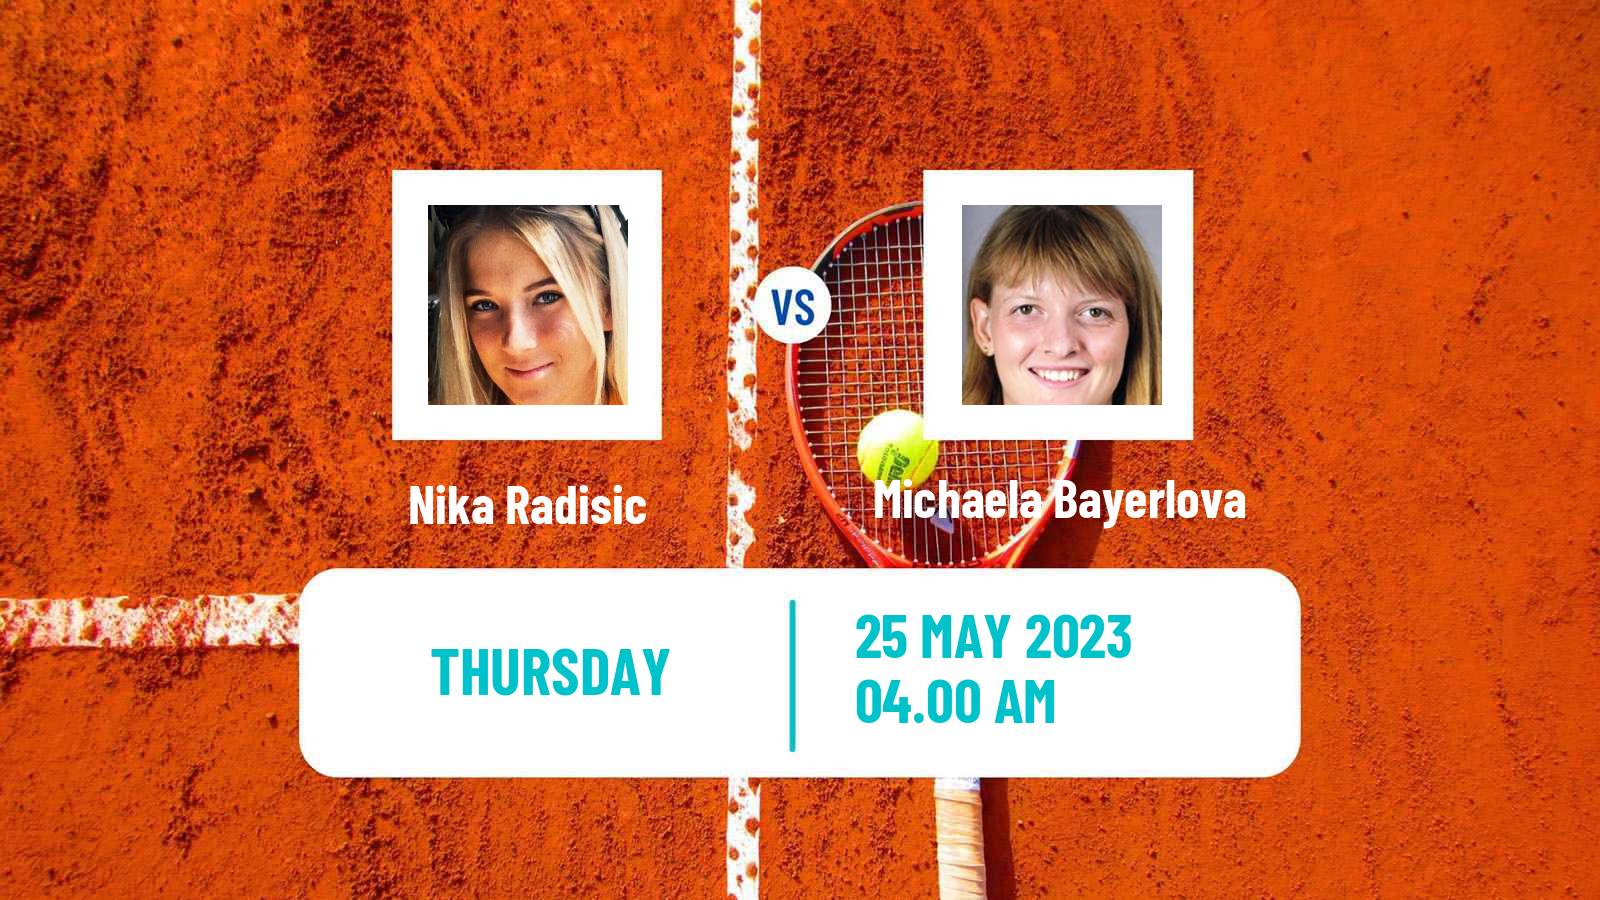 Tennis ITF W25 Warmbad Villach Women Nika Radisic - Michaela Bayerlova